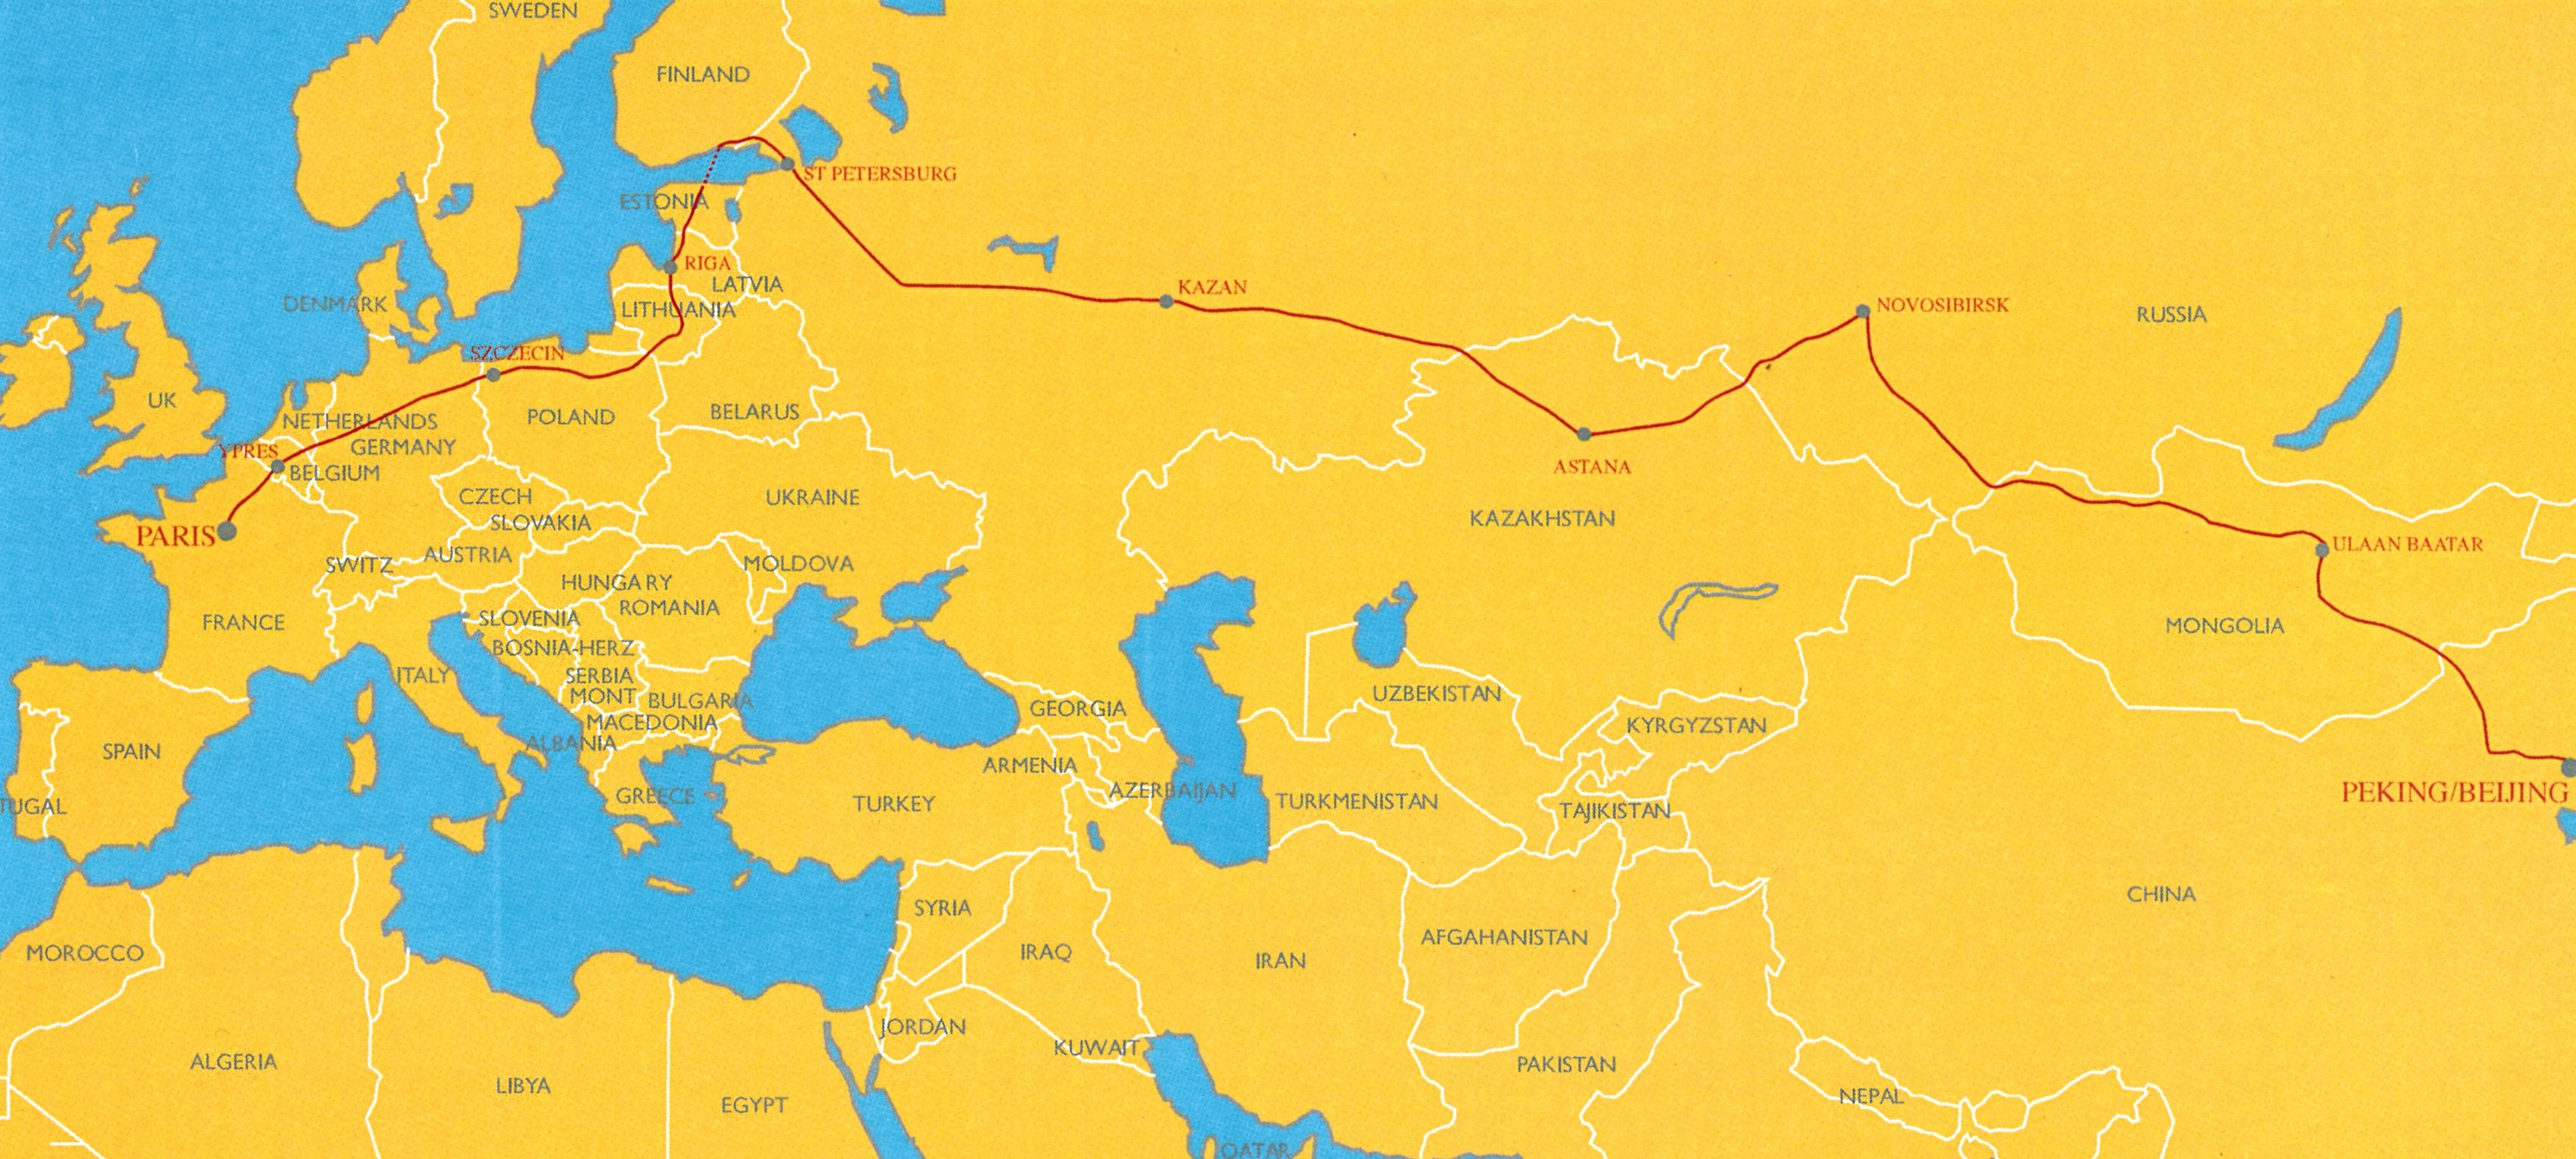 Peking to Paris Route Map